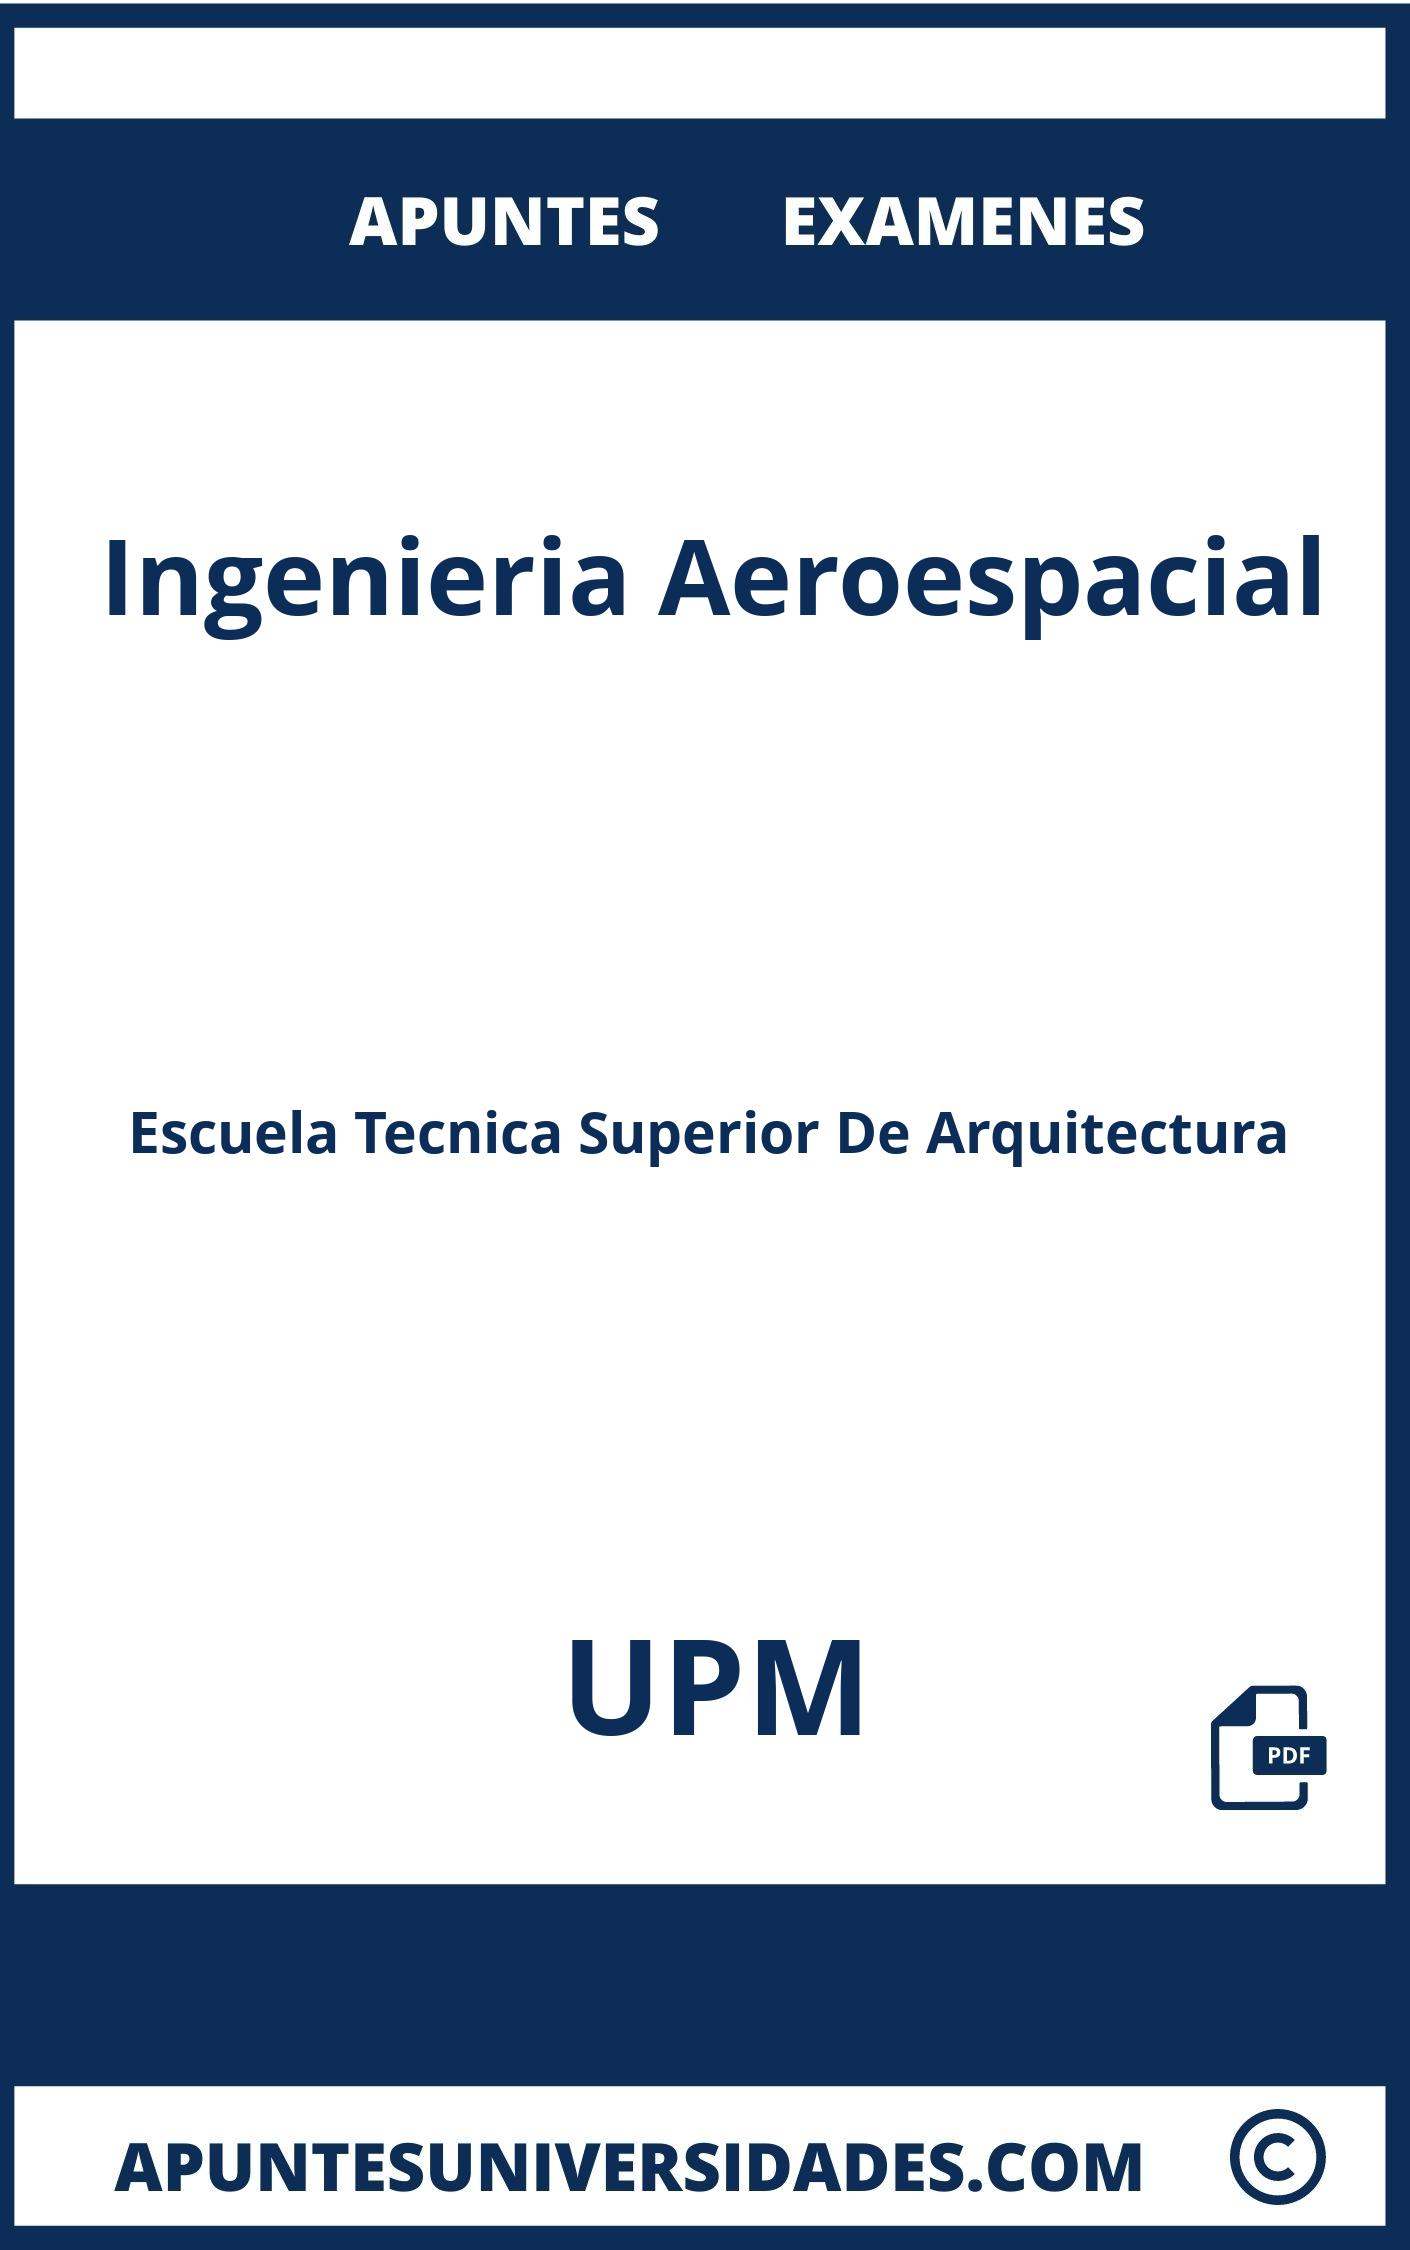 Apuntes Examenes Ingenieria Aeroespacial UPM